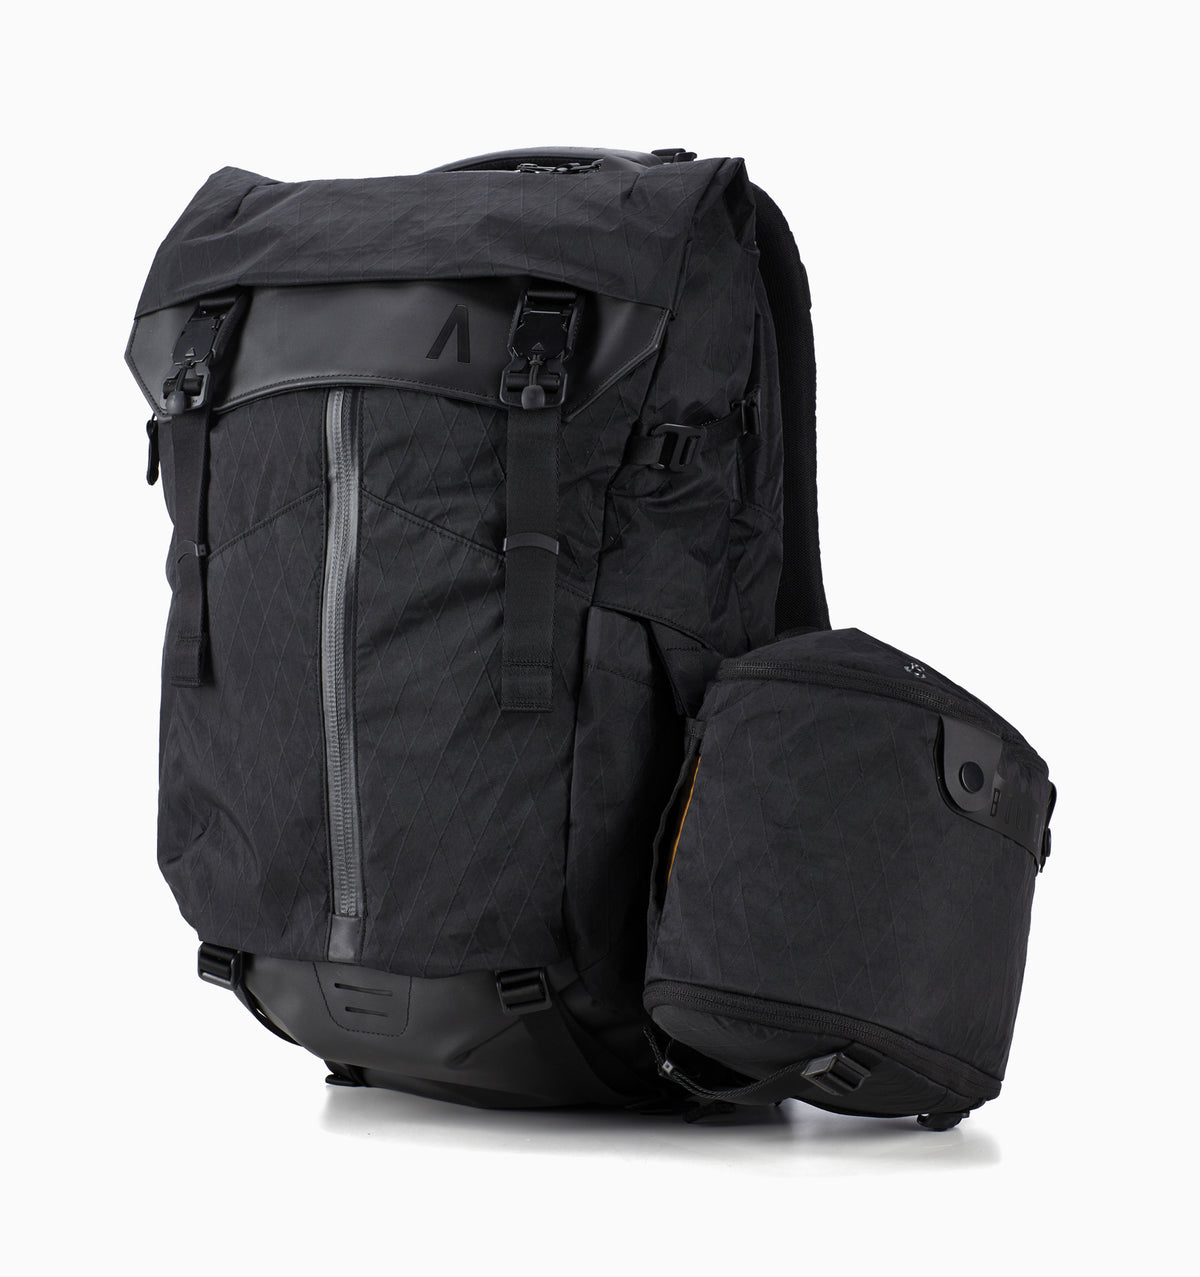 Boundary Supply 17" Prima System Modular XPAC DSLR Travel Backpack 30L - Black